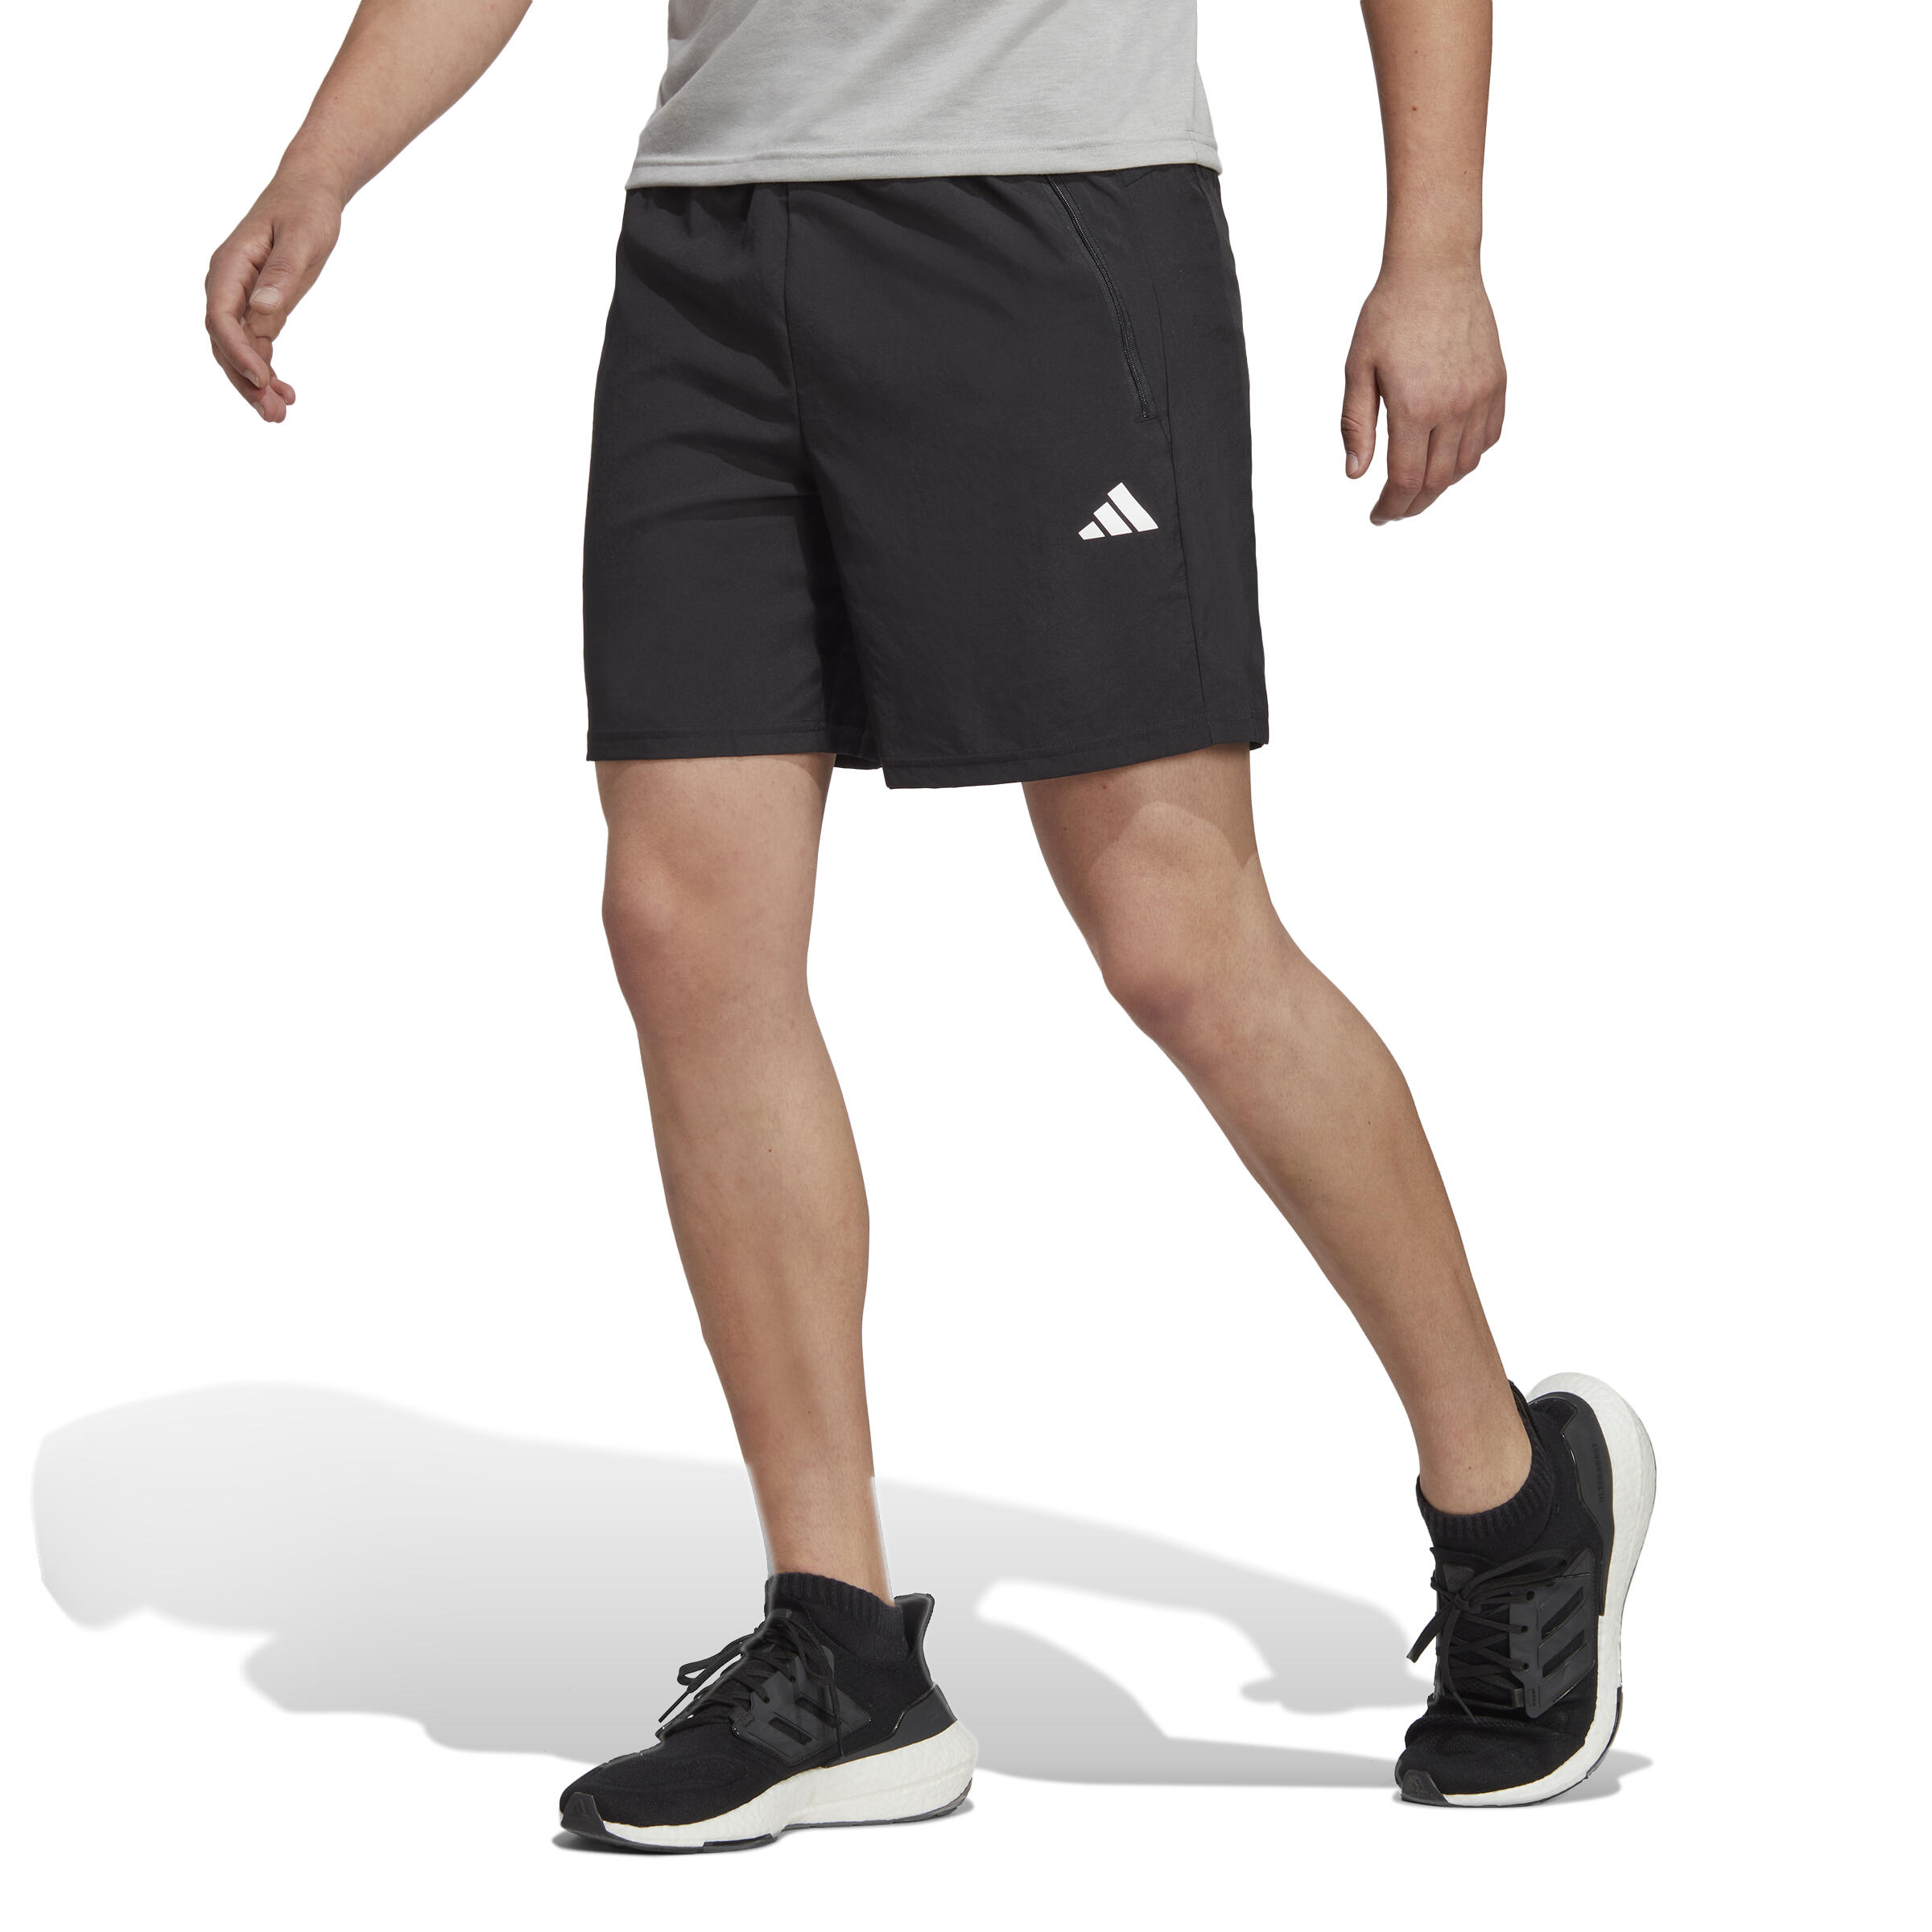 Adidas Shorts Herren - schwarz